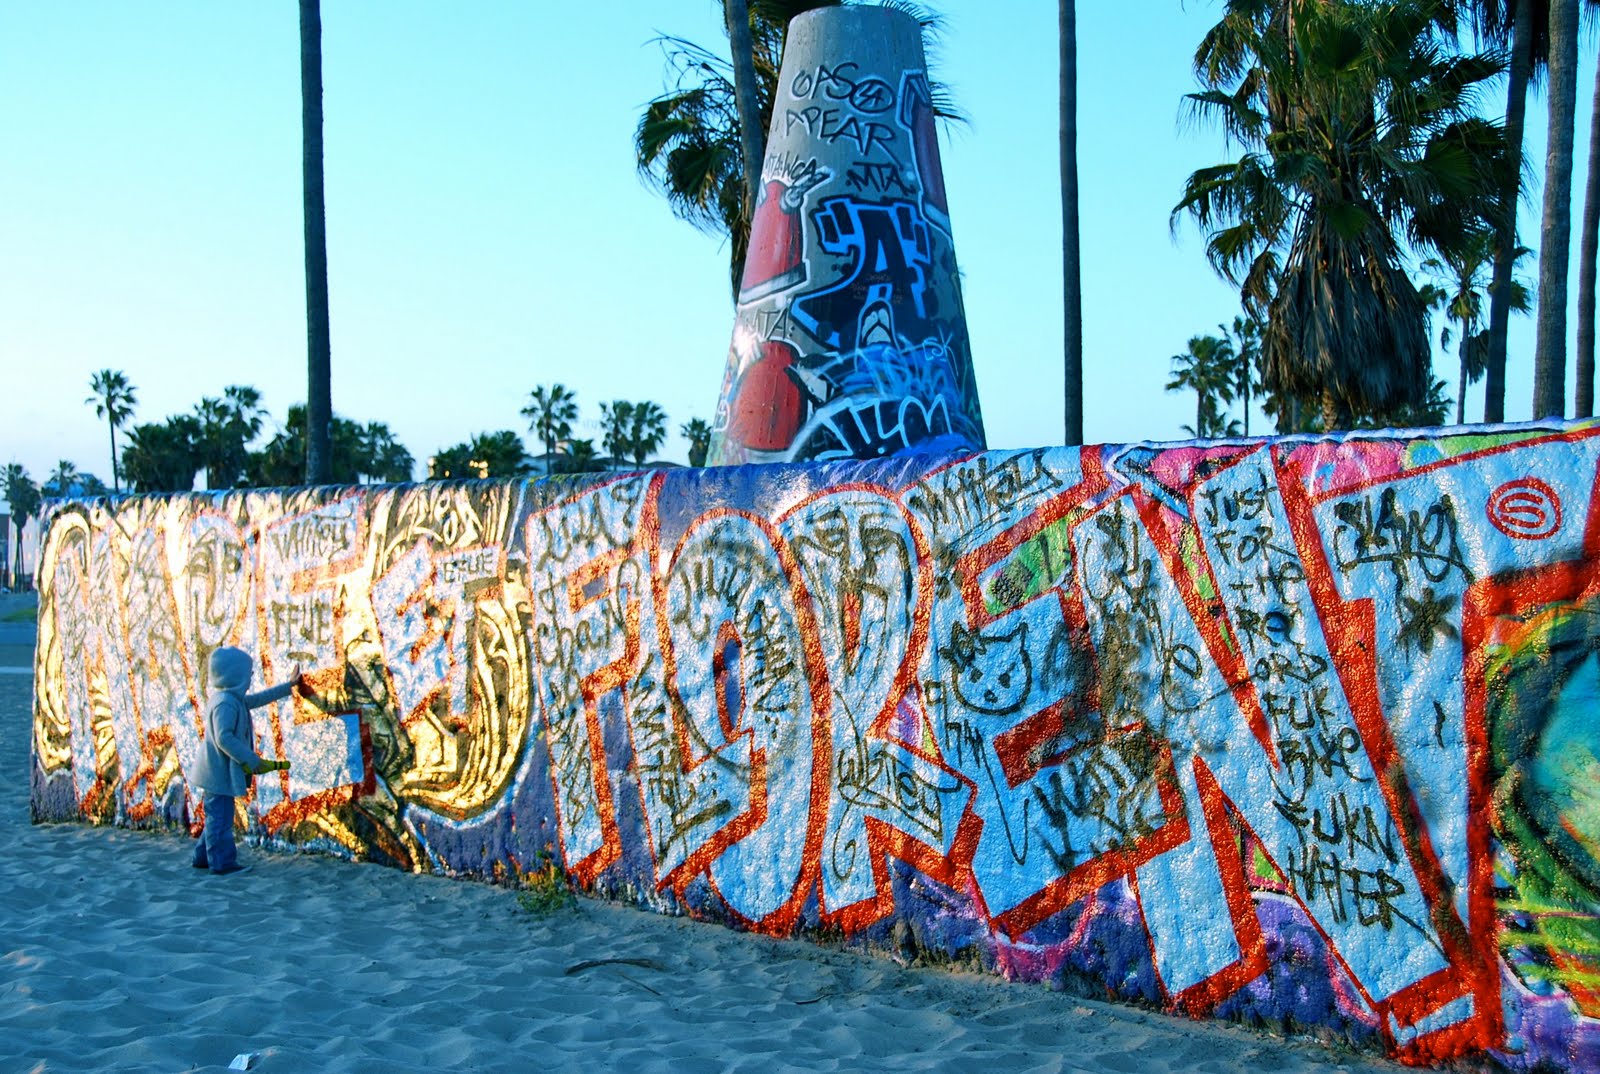 Venice Graffitisolaire Beach Graffiti Wall P2lcs7vu Apex